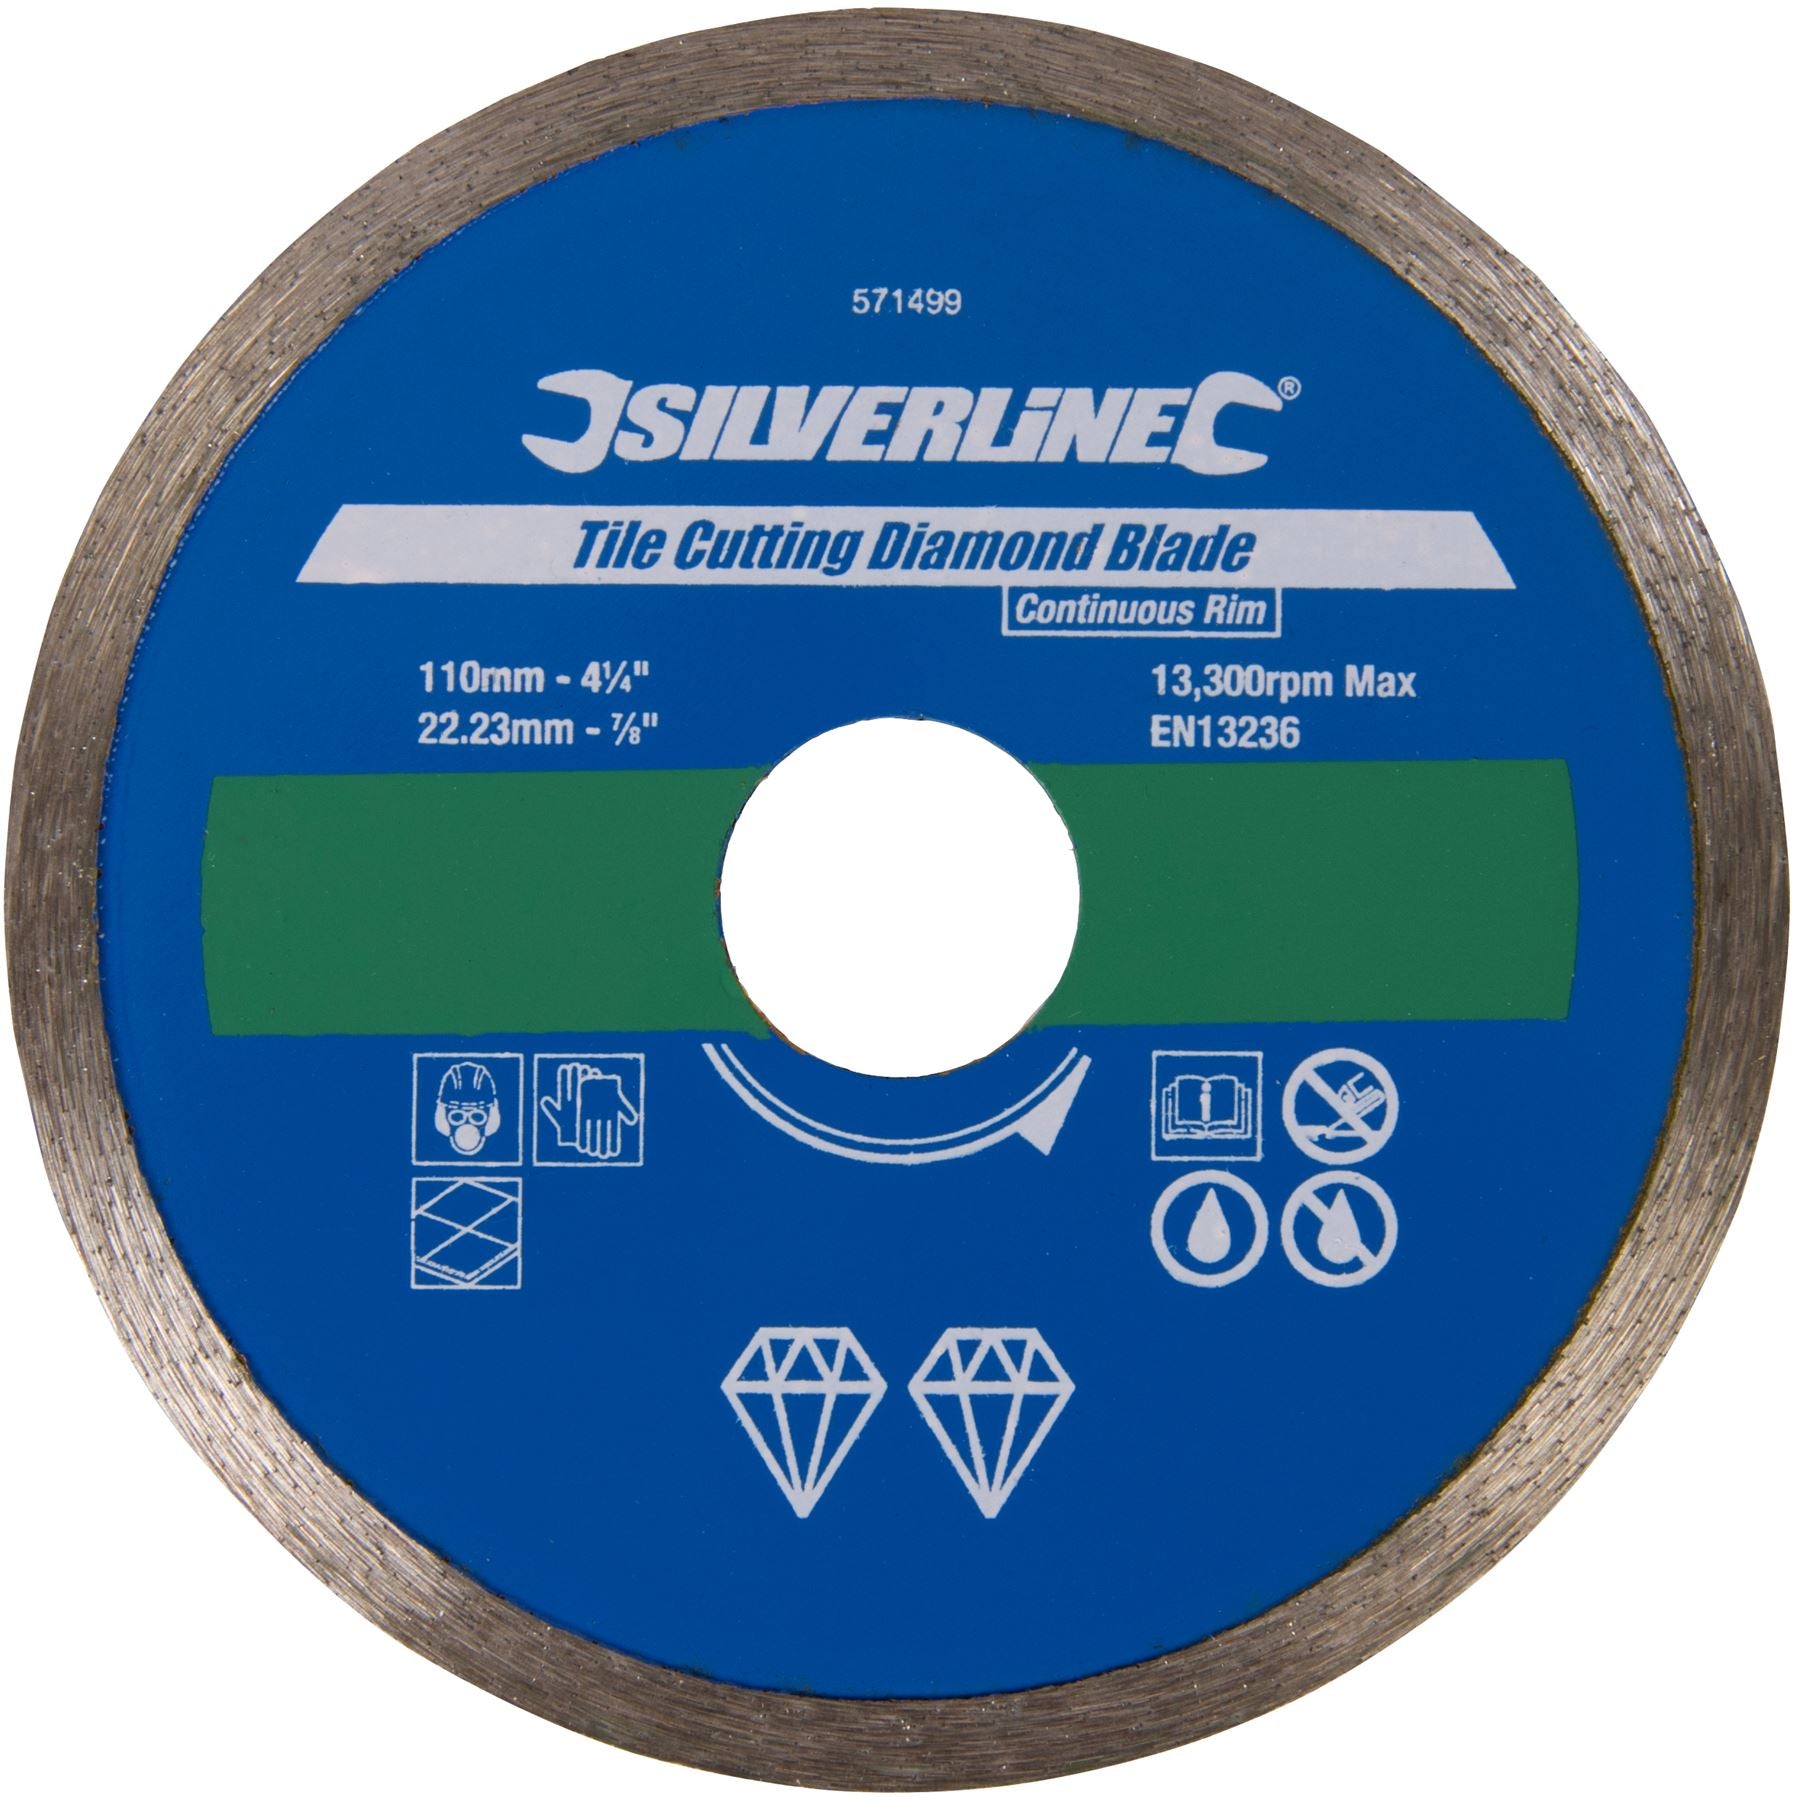 Silverline Tile Cutting Diamond Disc